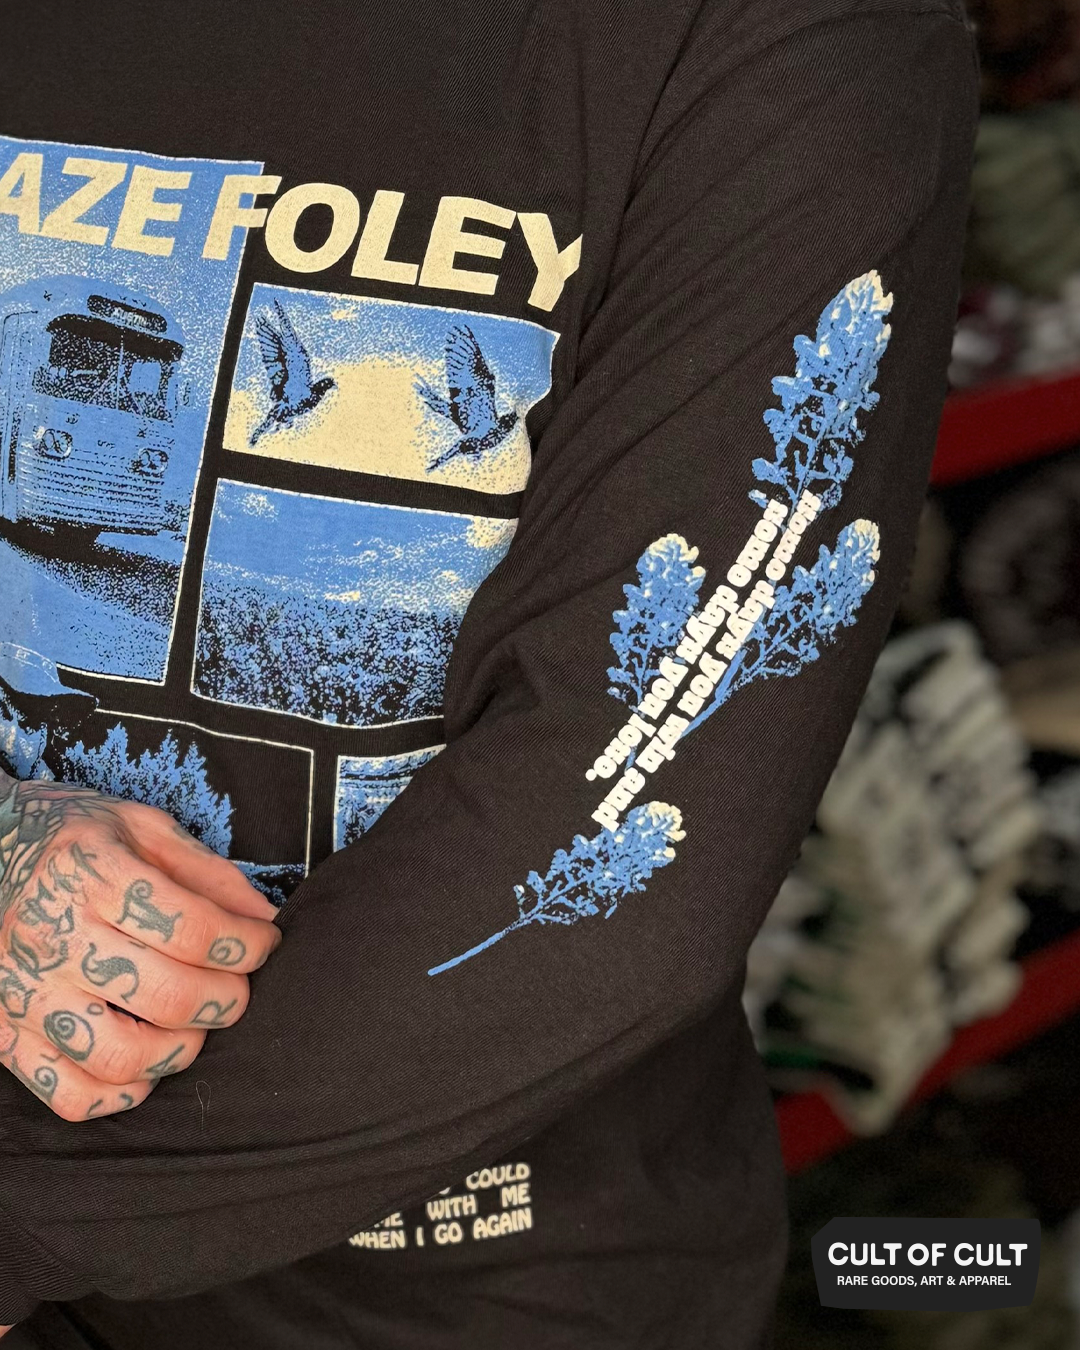 Blaze Foley Clay Pigeons Long Sleeve